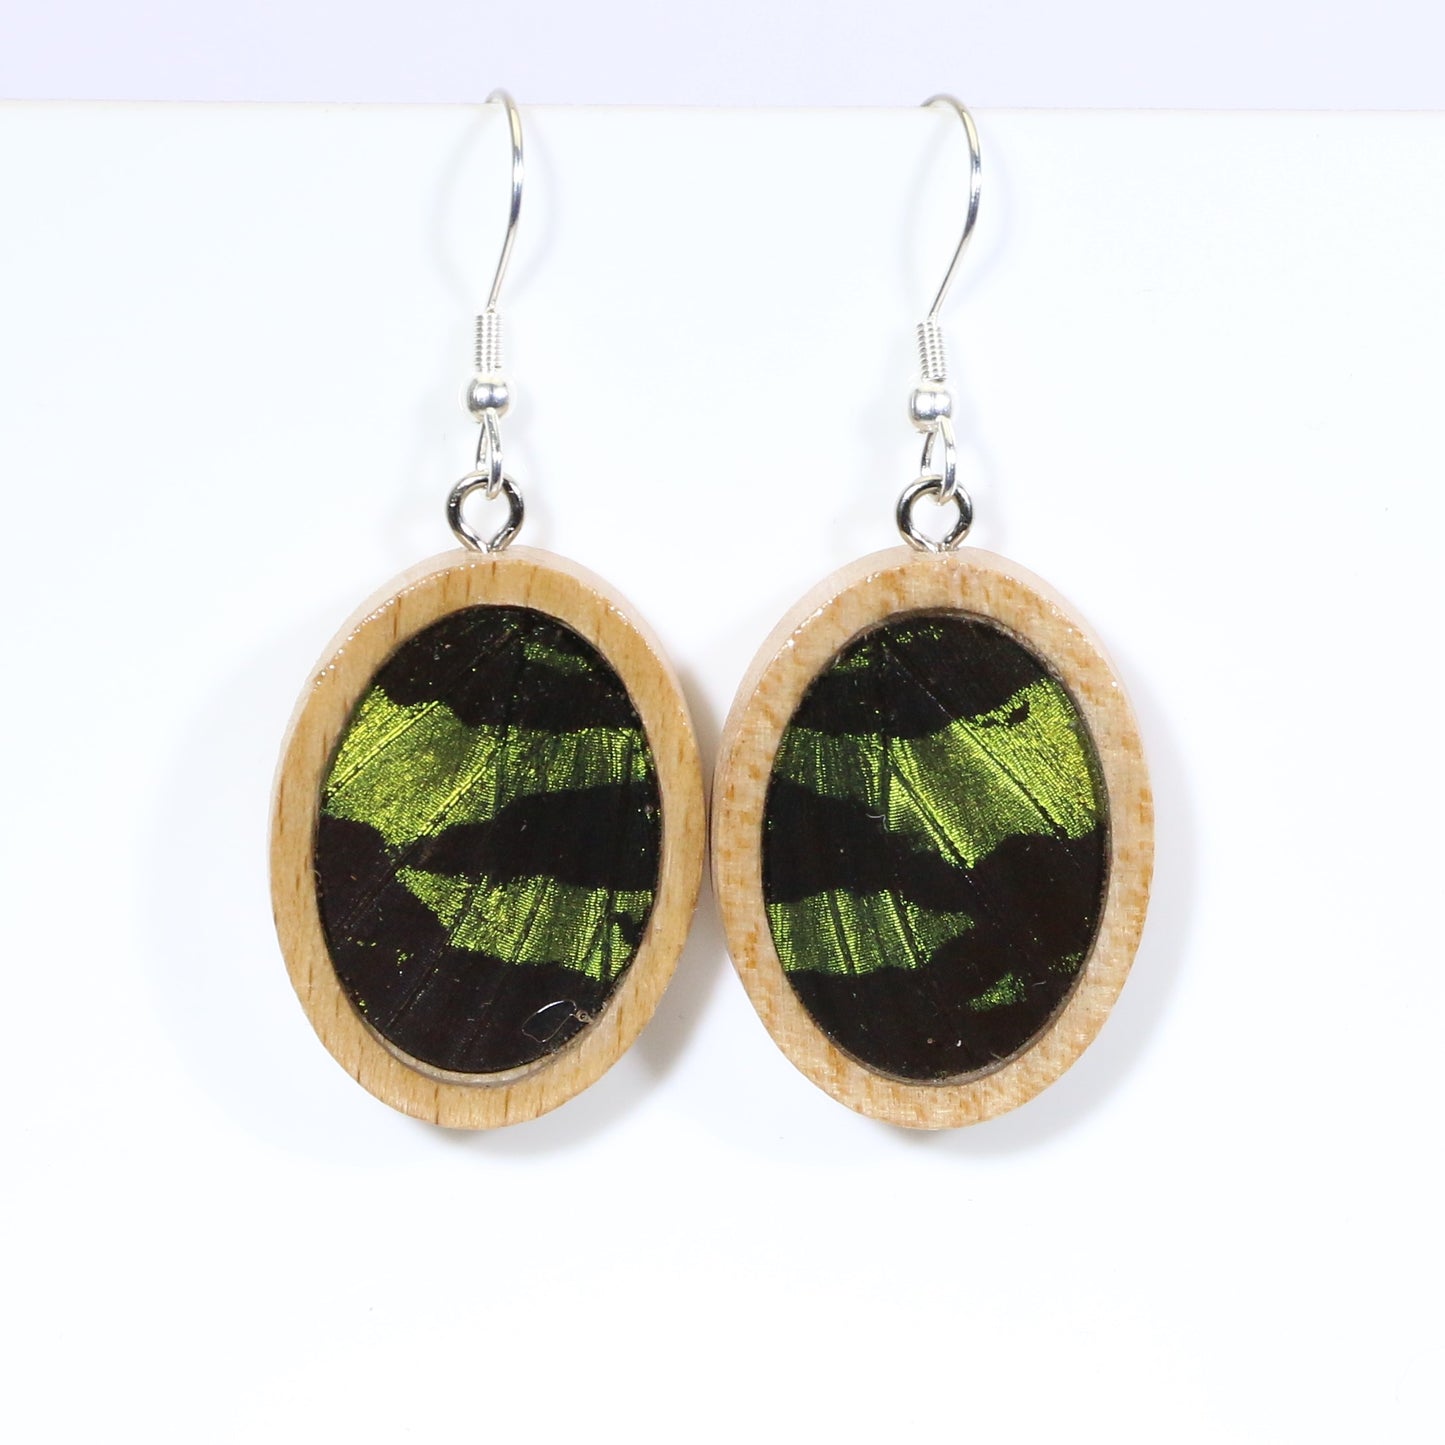 51603 - Real Butterfly Wing Jewelry - Earrings - Medium - Tan Wood - Oval - Plain - Sunset Moth - Green